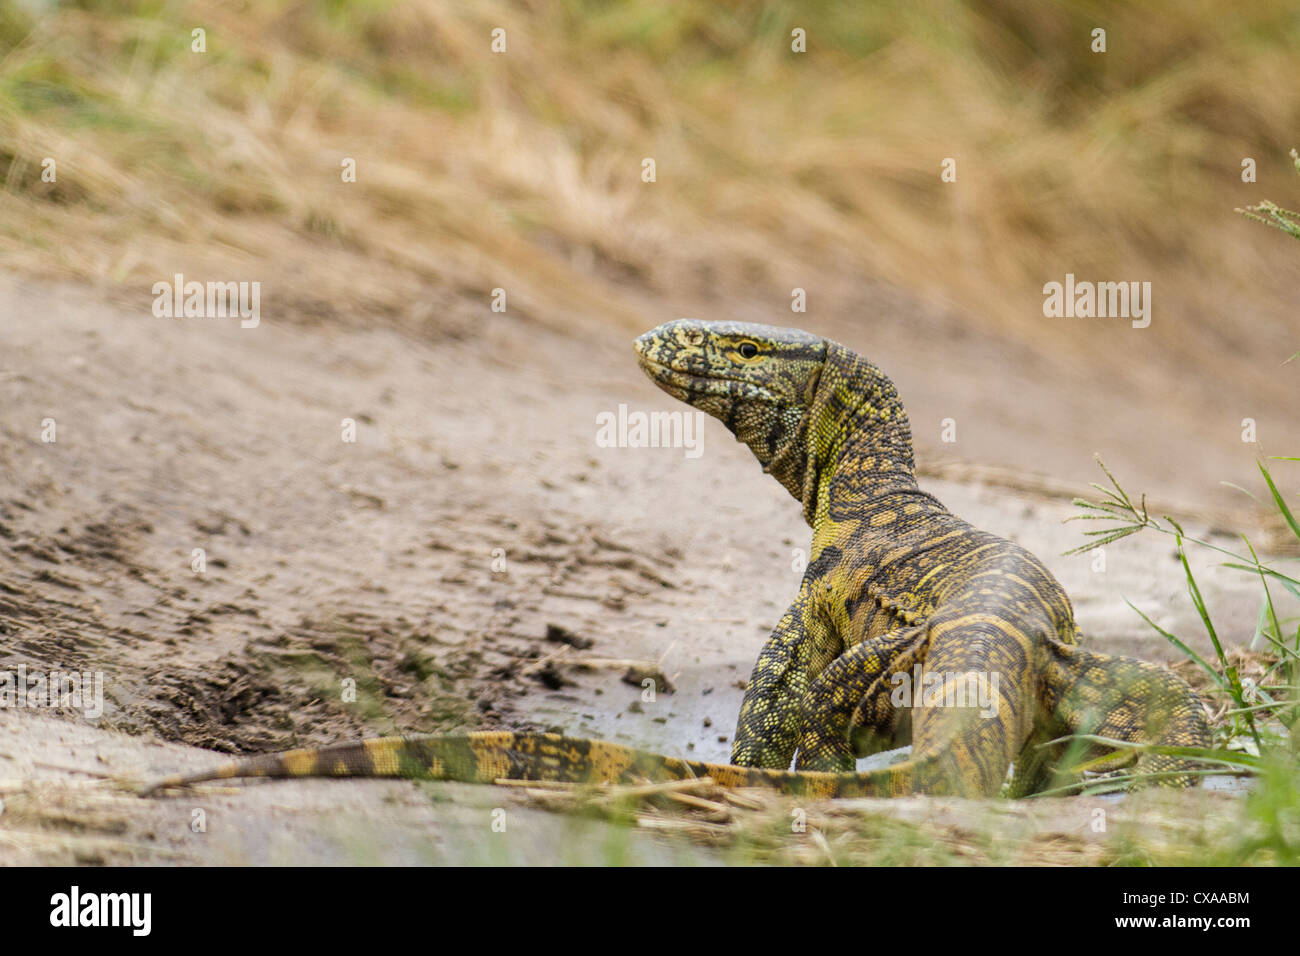 Nile Monitor Lizard, Queen Elizabeth National Park, Uganda Stock Photo